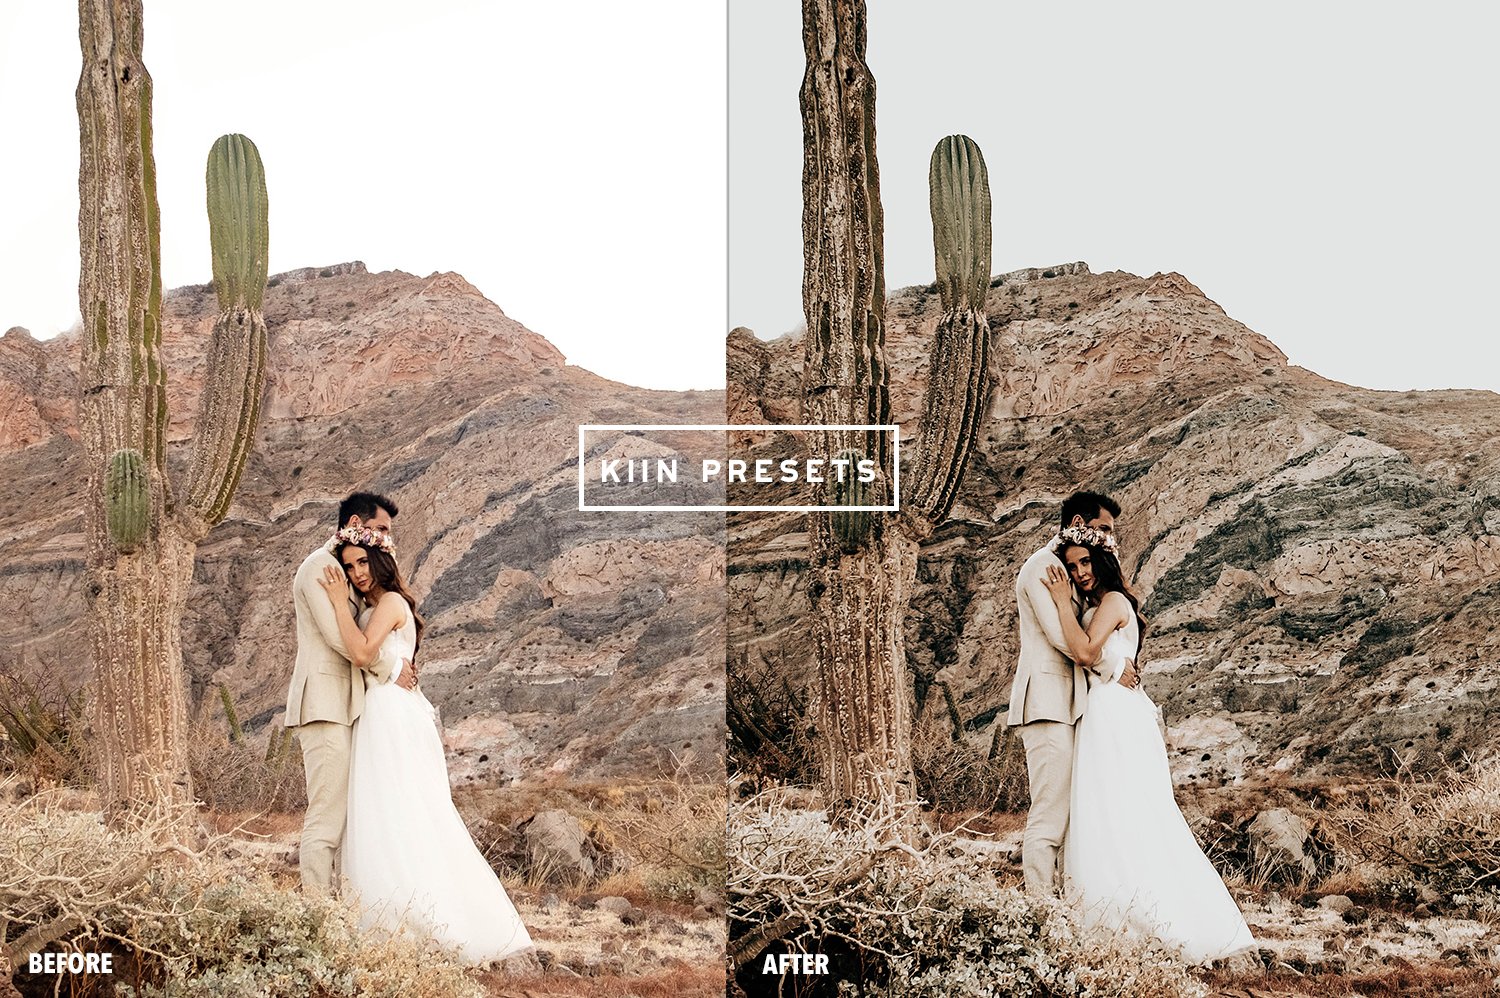 02kiin presetslightroom presetsmobile presets wedding presets boho wedding presets wedding photography preset wedding filter boho presets. 377